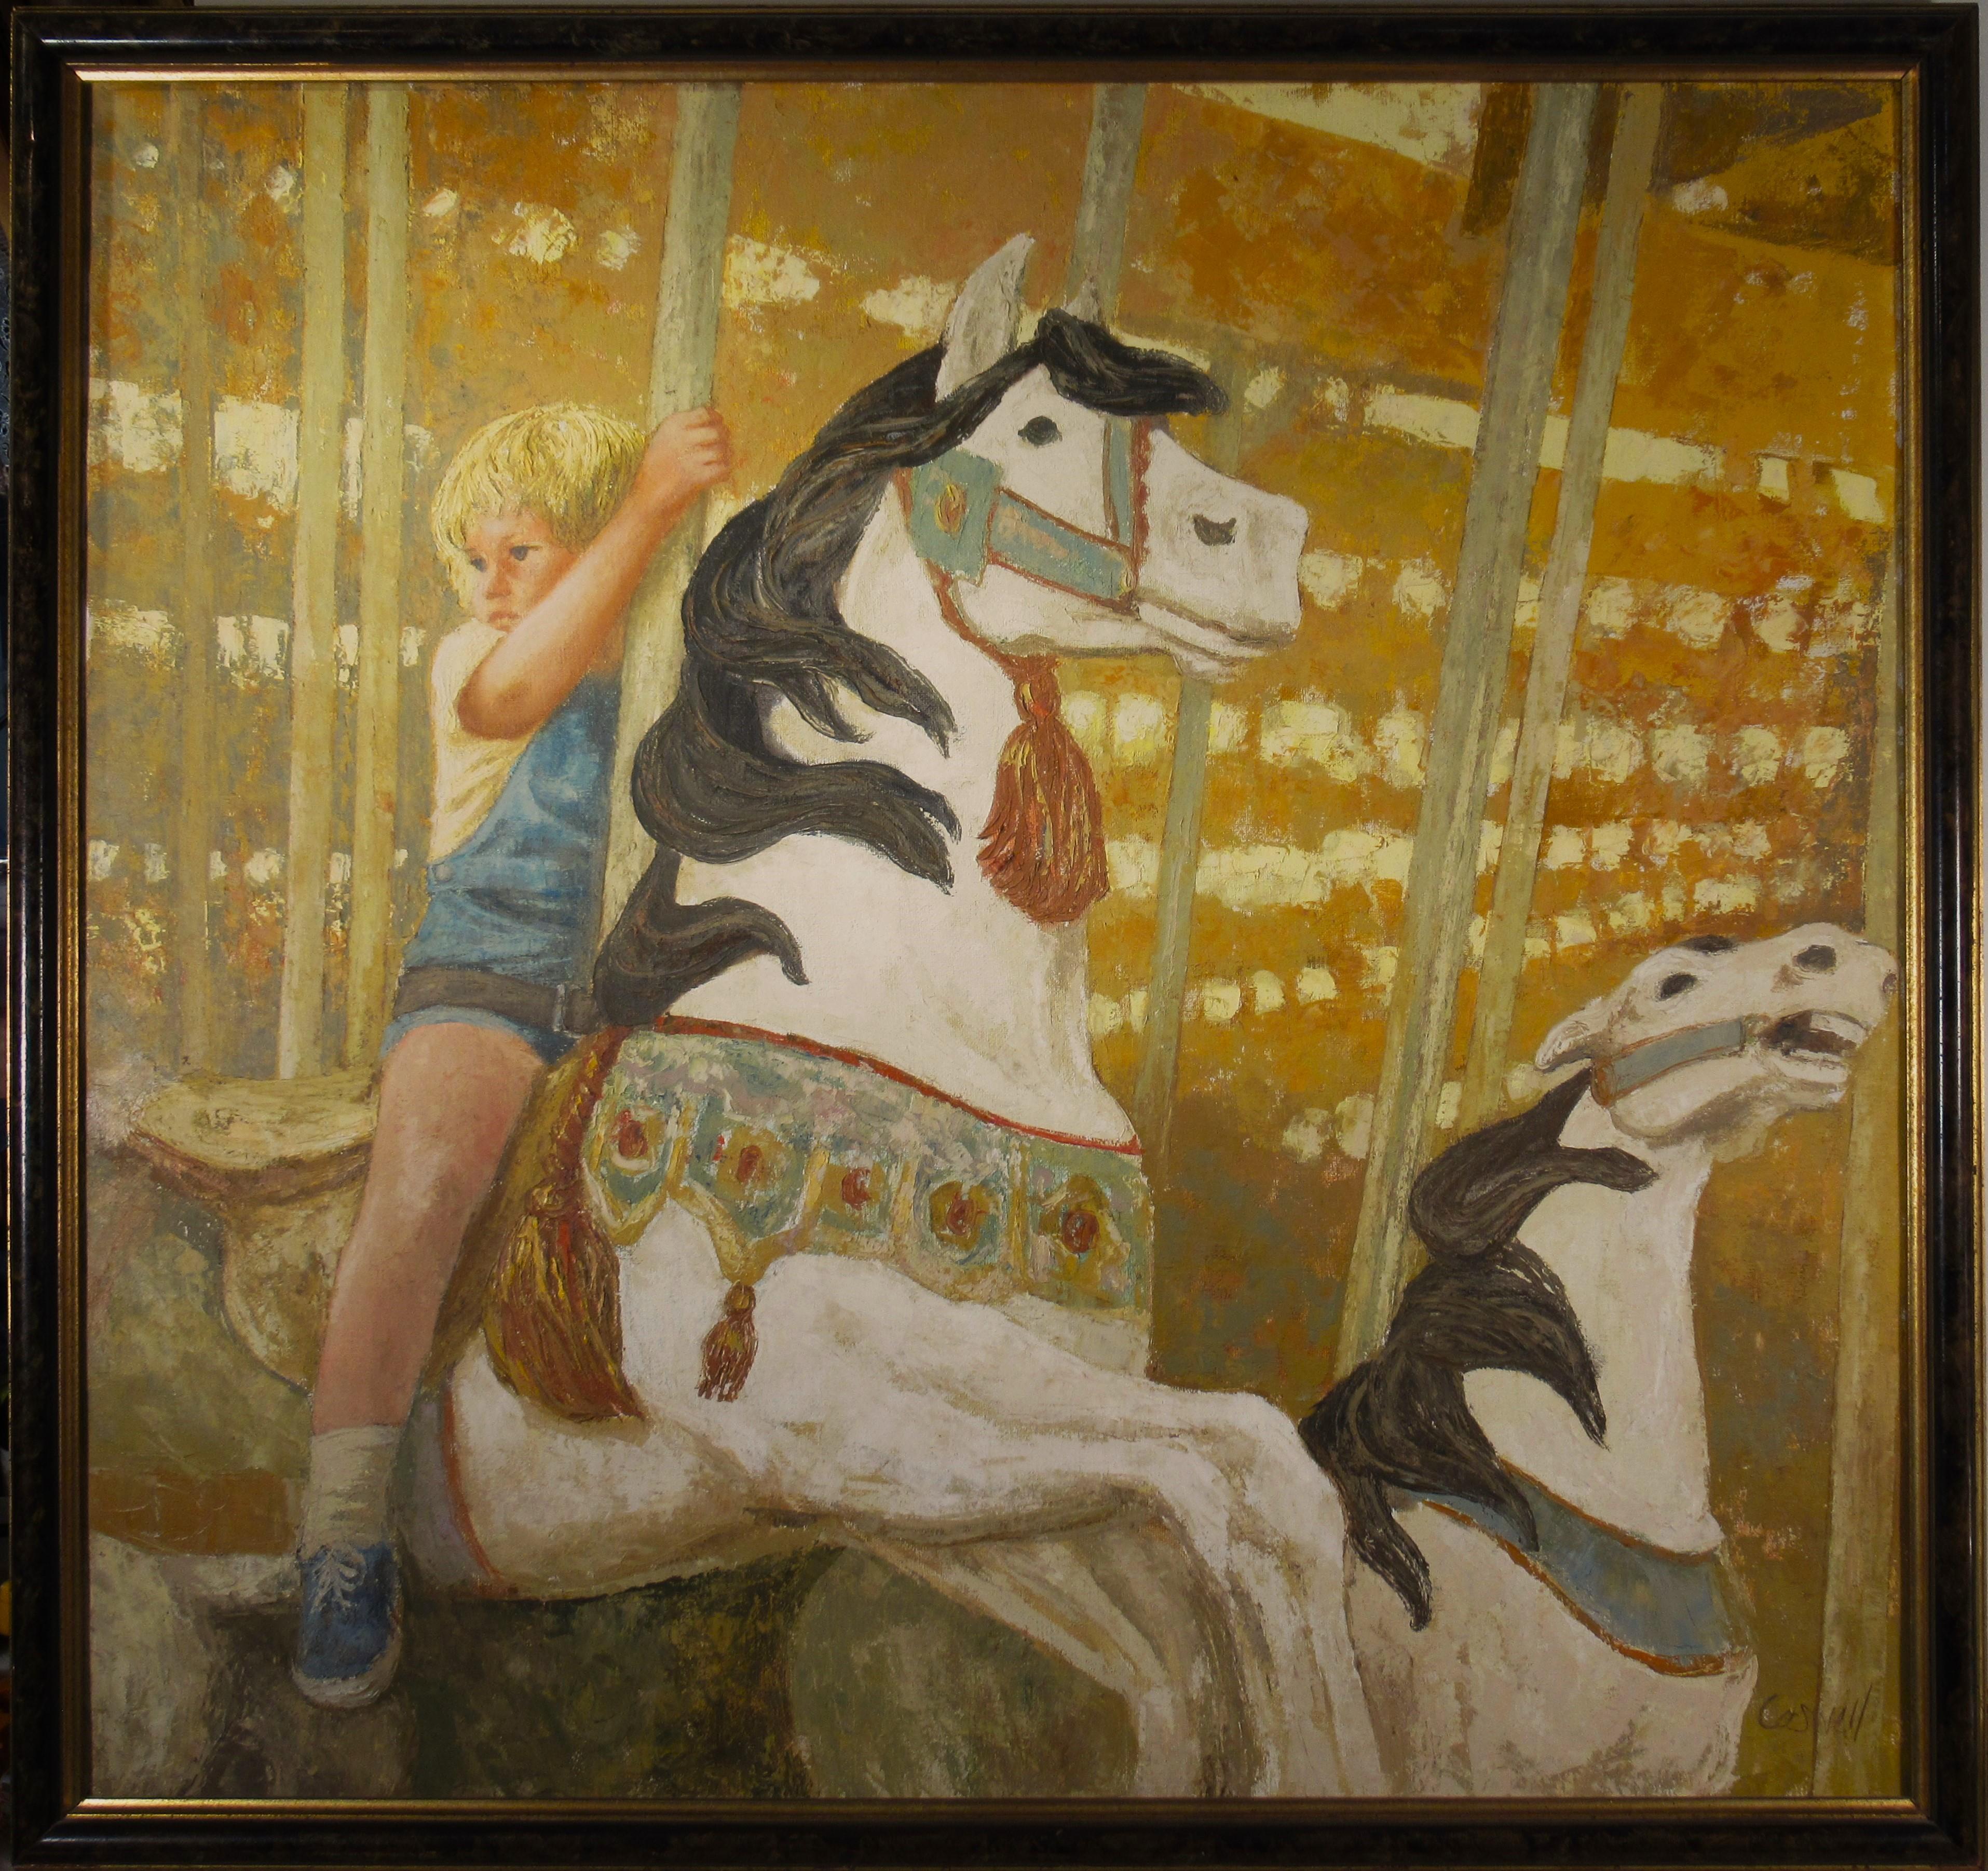 Figurative Painting Helen Rayburn Caswell - "Boy on Carousel" grande peinture à l'huile